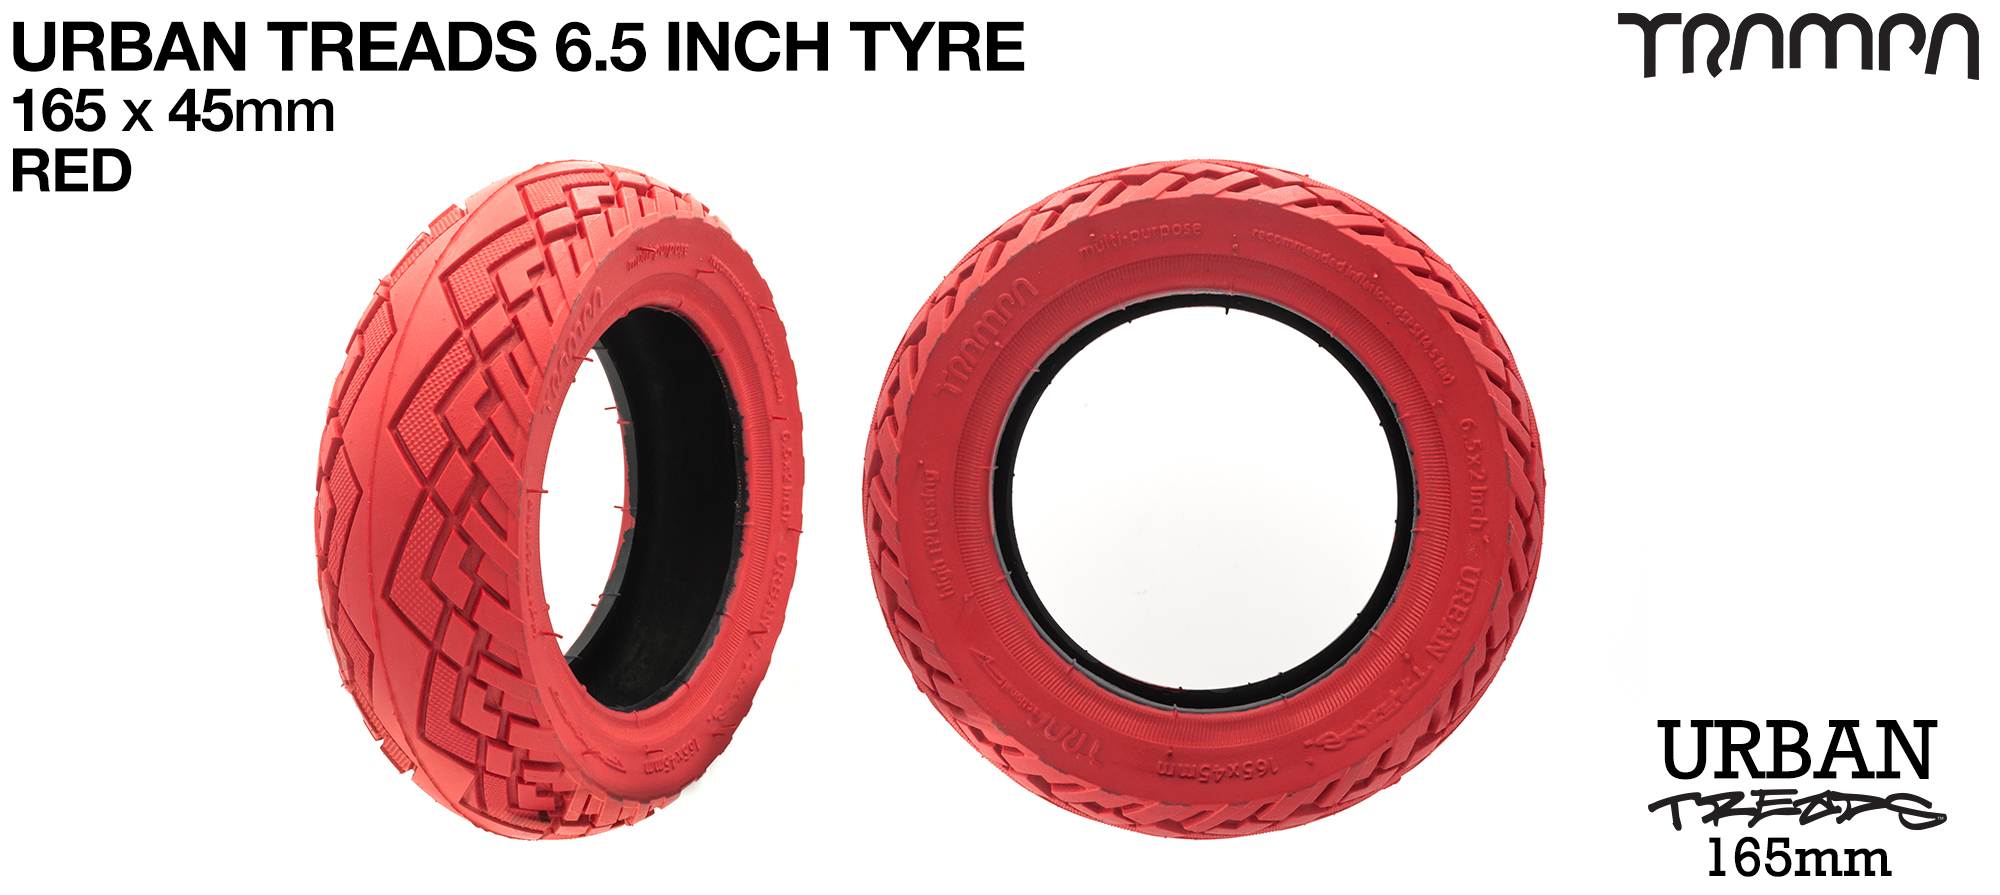 URBAN Treads Tyre - RED x4 